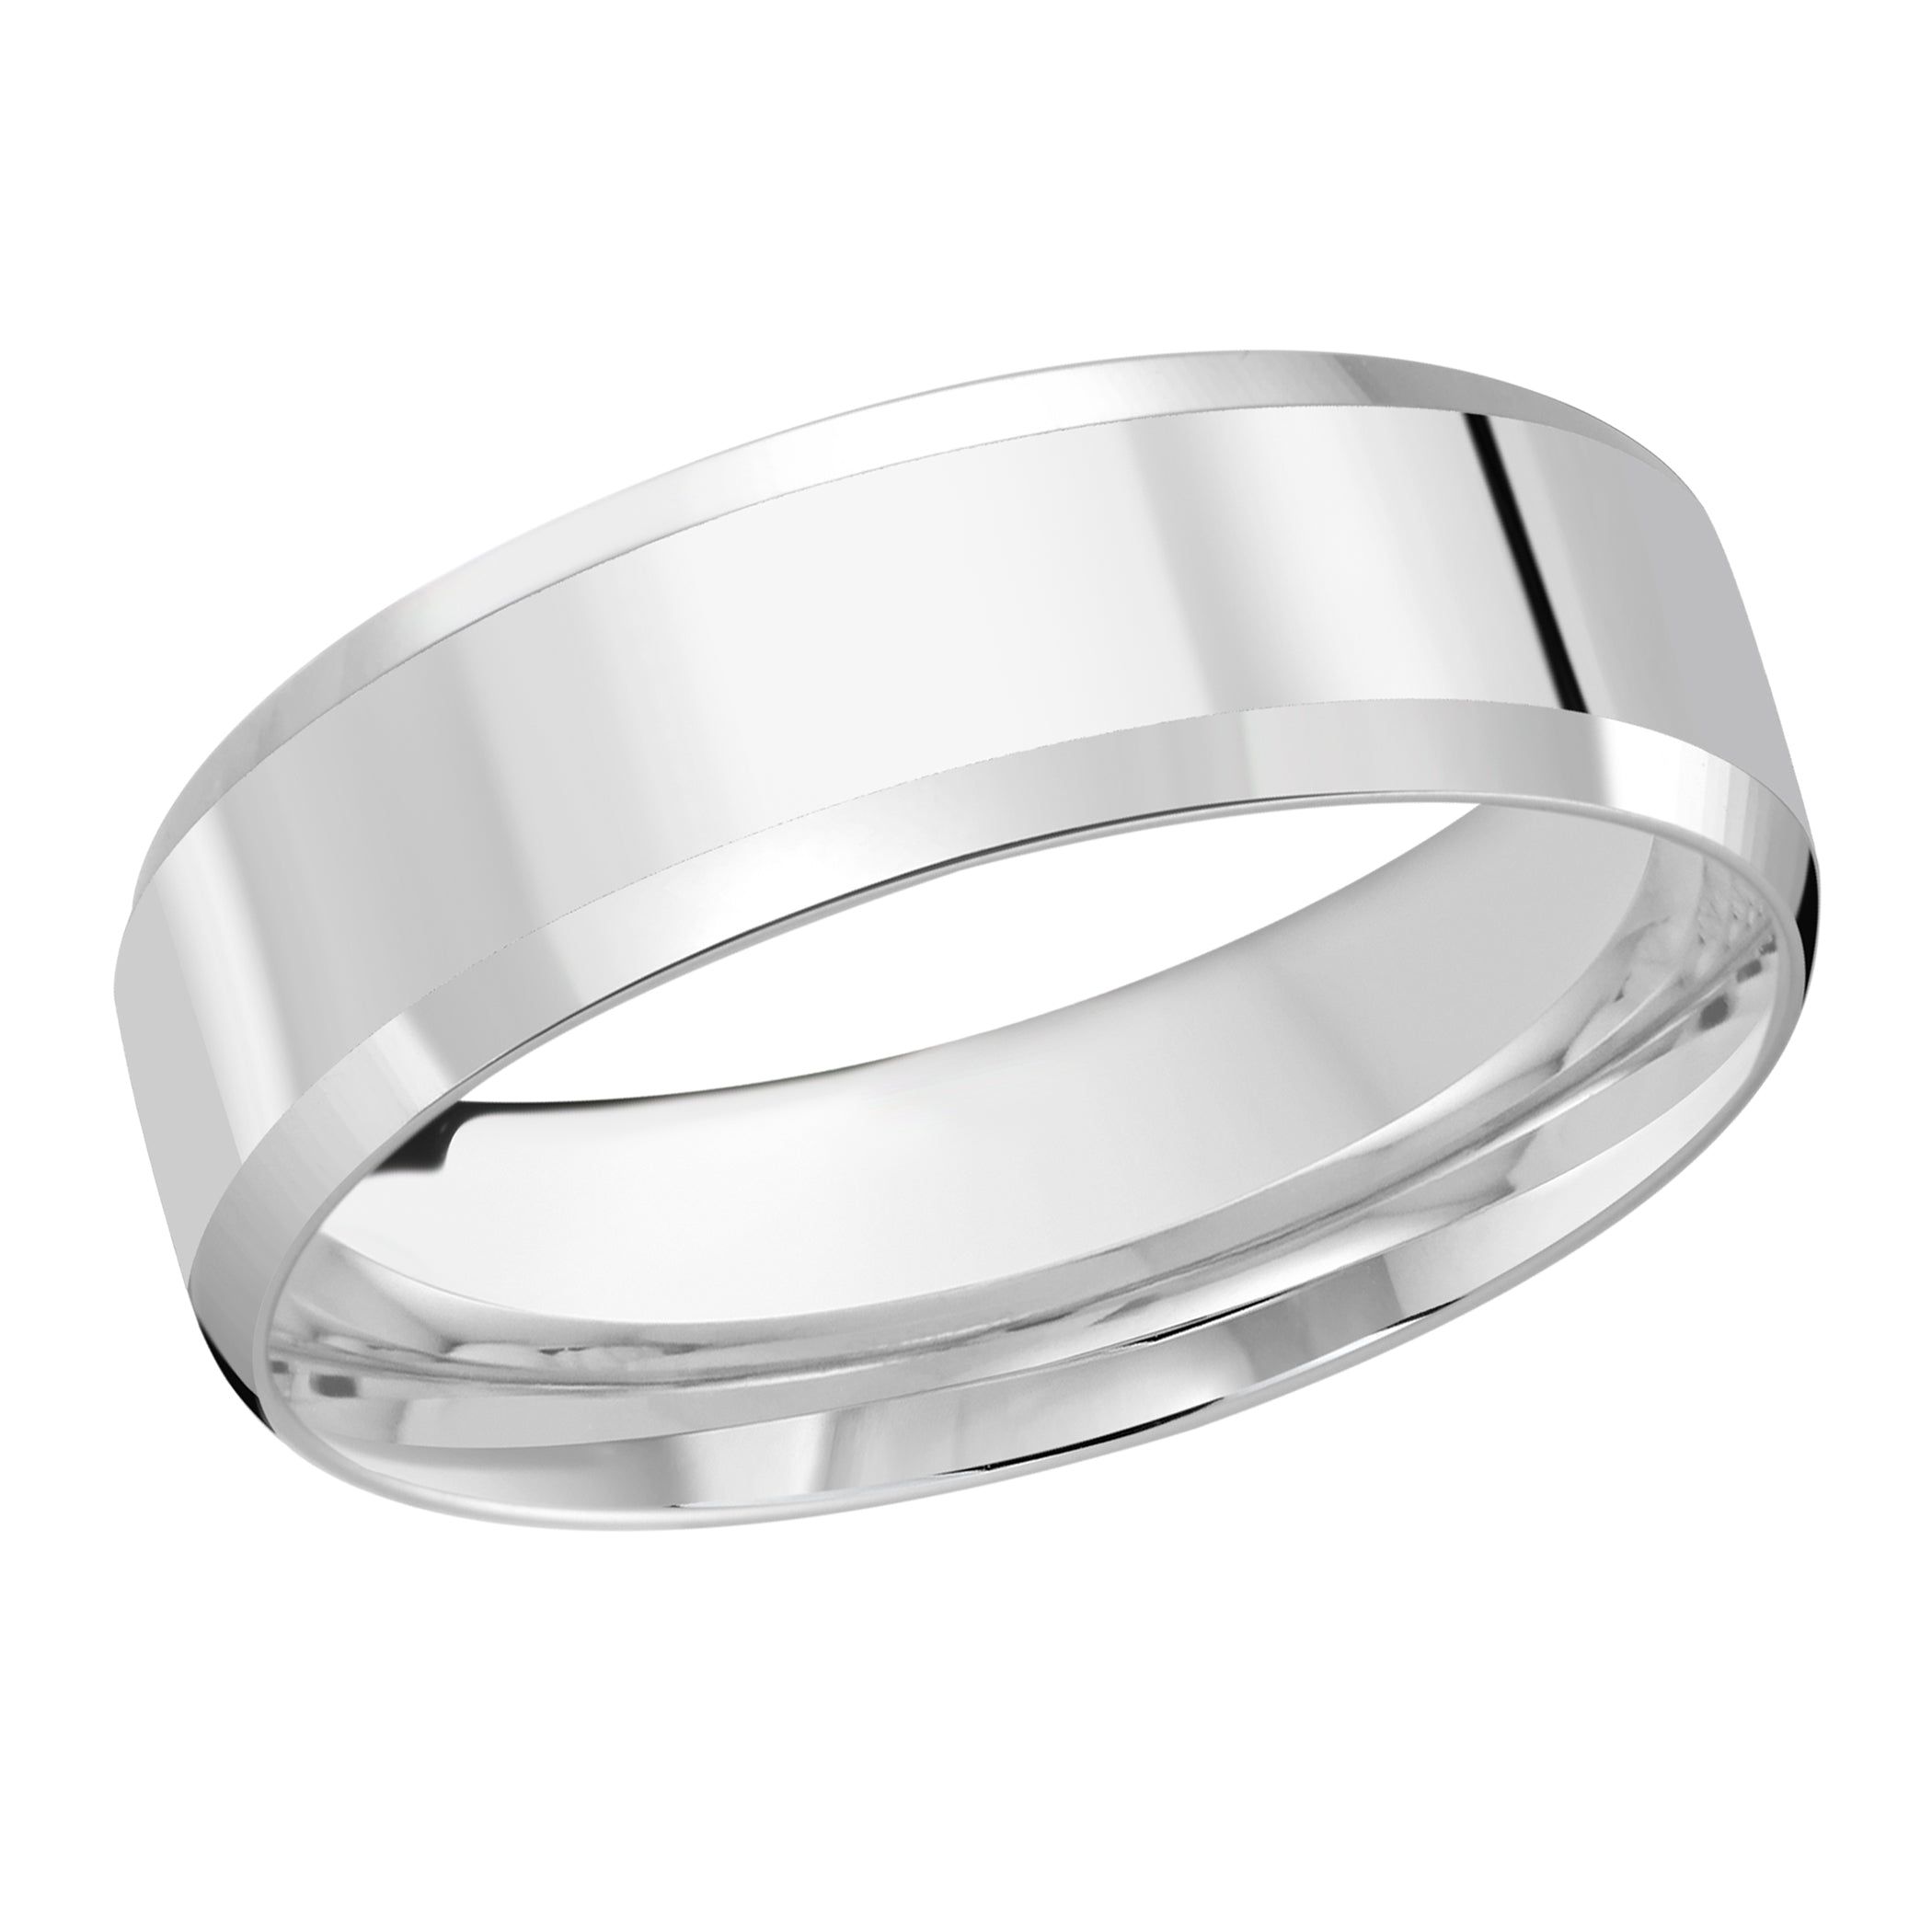 Men's Beveled Edge Wedding Ring